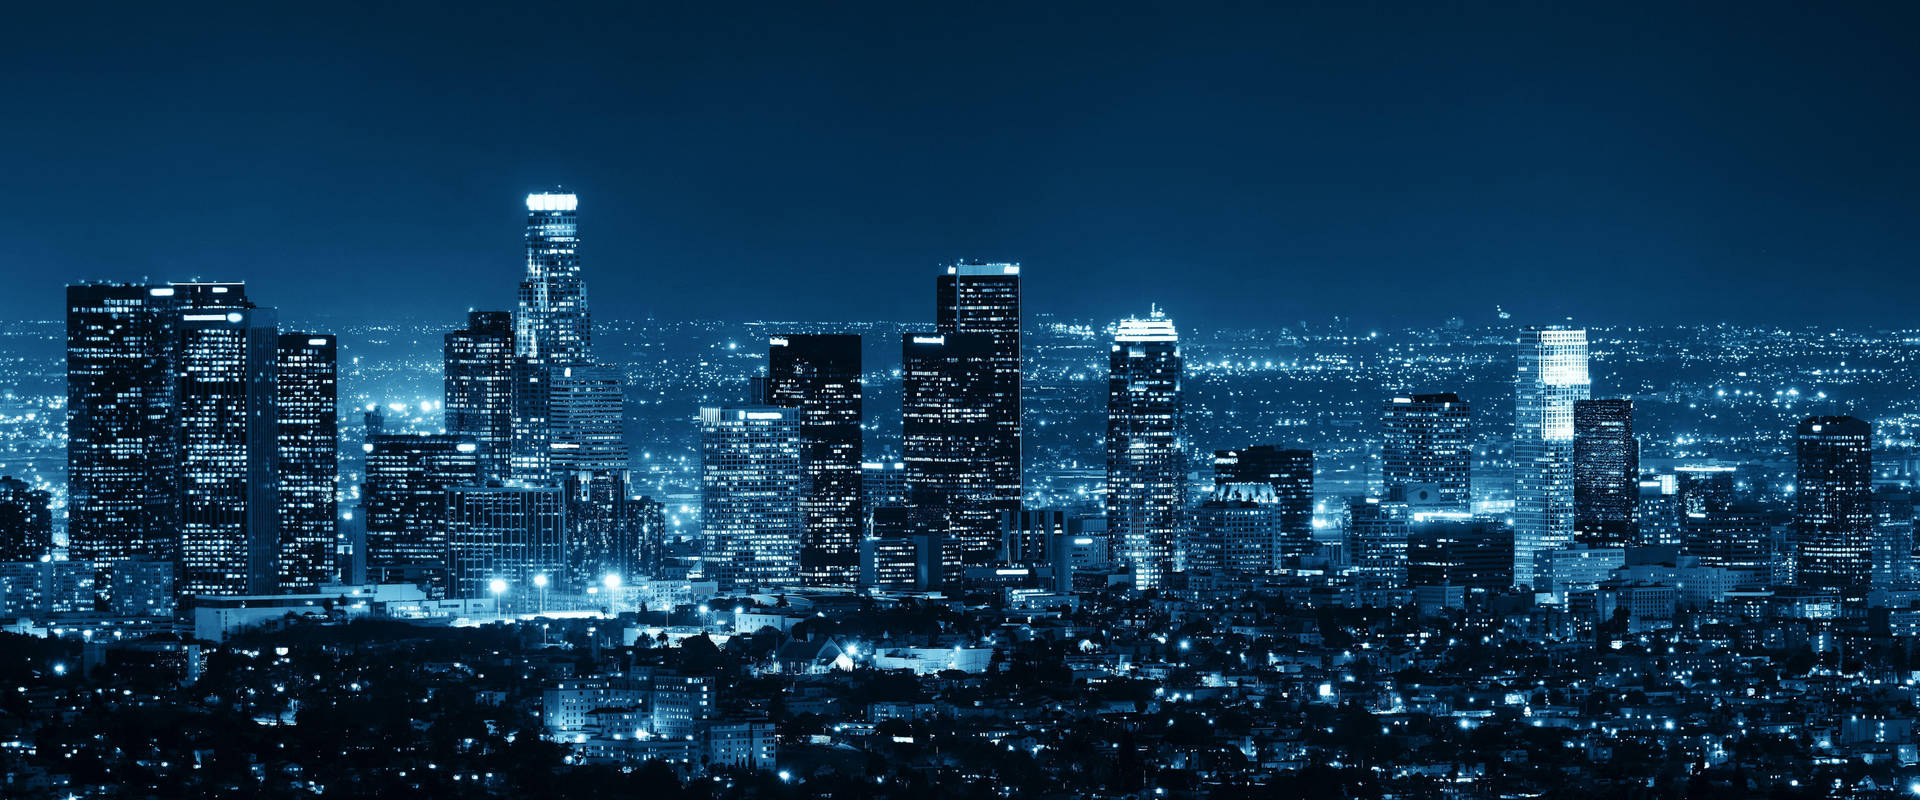 Blue-tinted Skyline Photo Of Los Angeles 4k